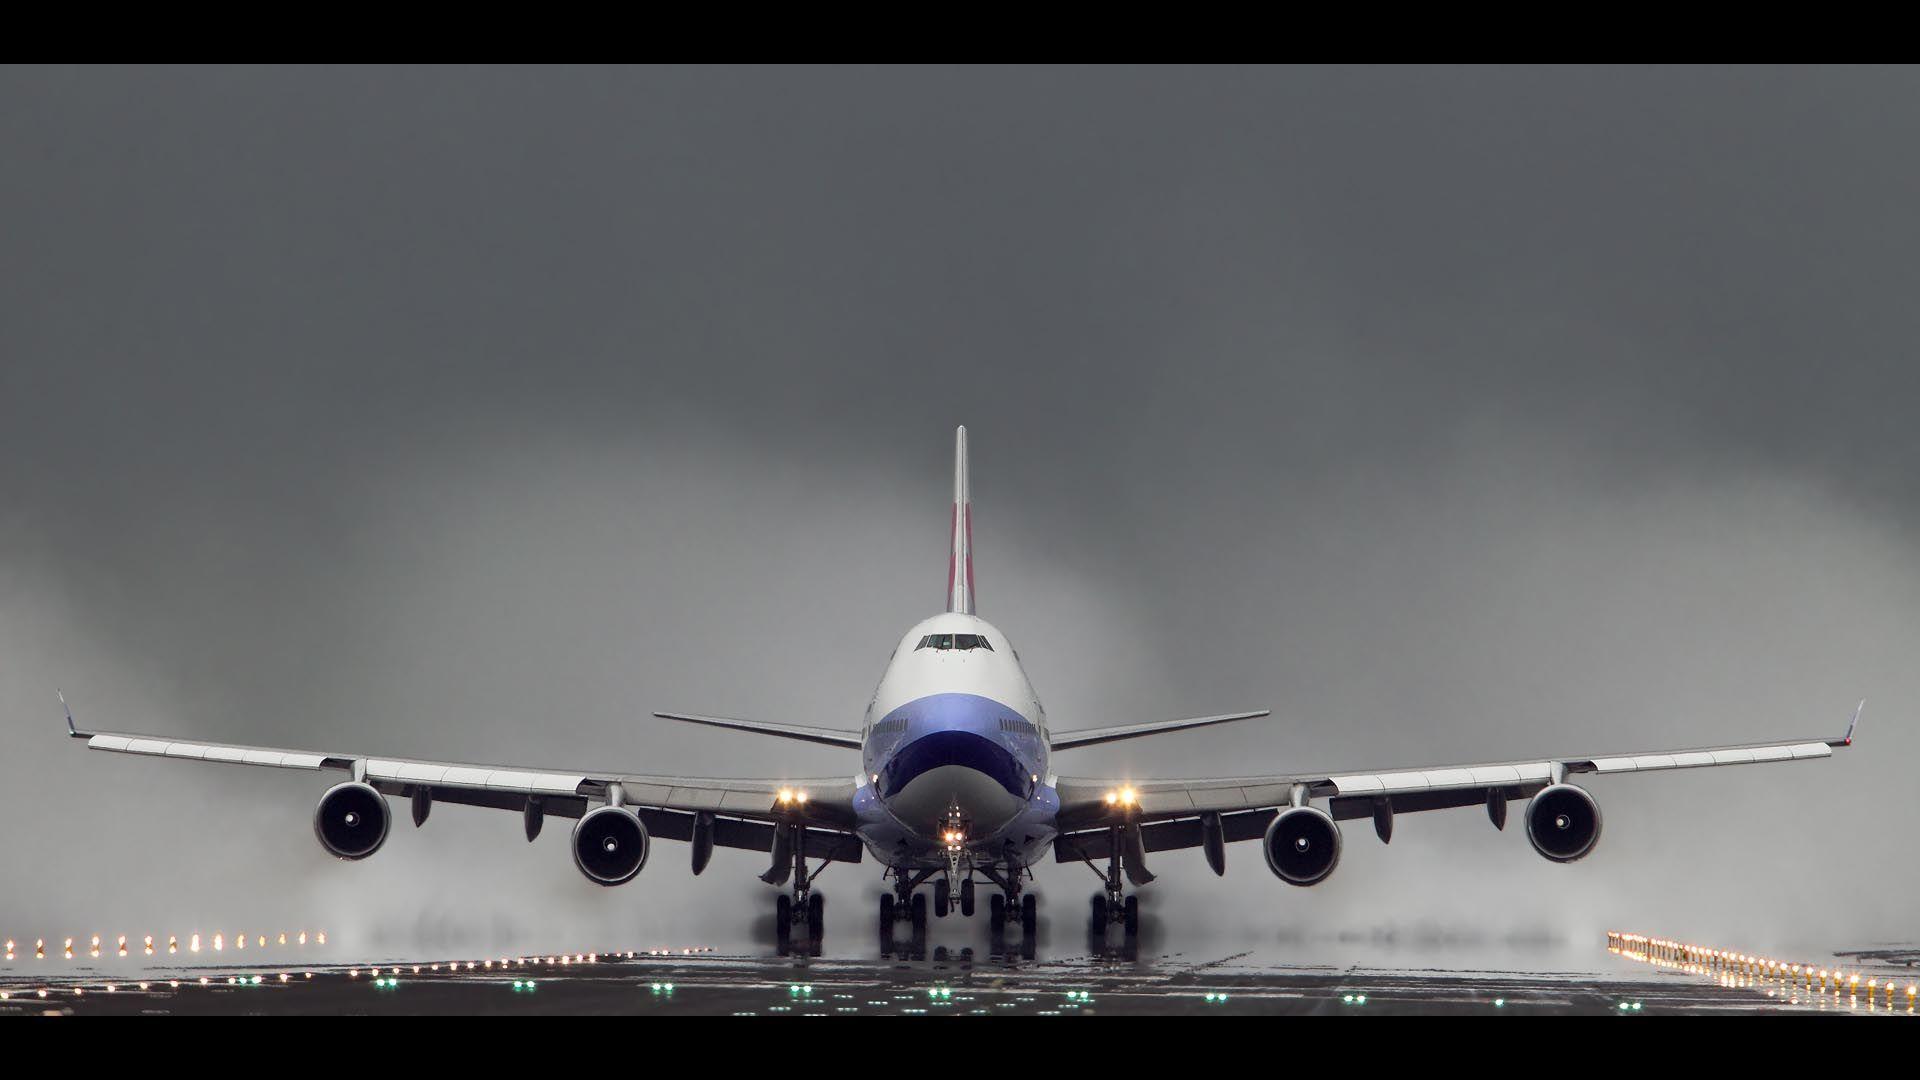 Boeing 747 HD Wallpaper free download